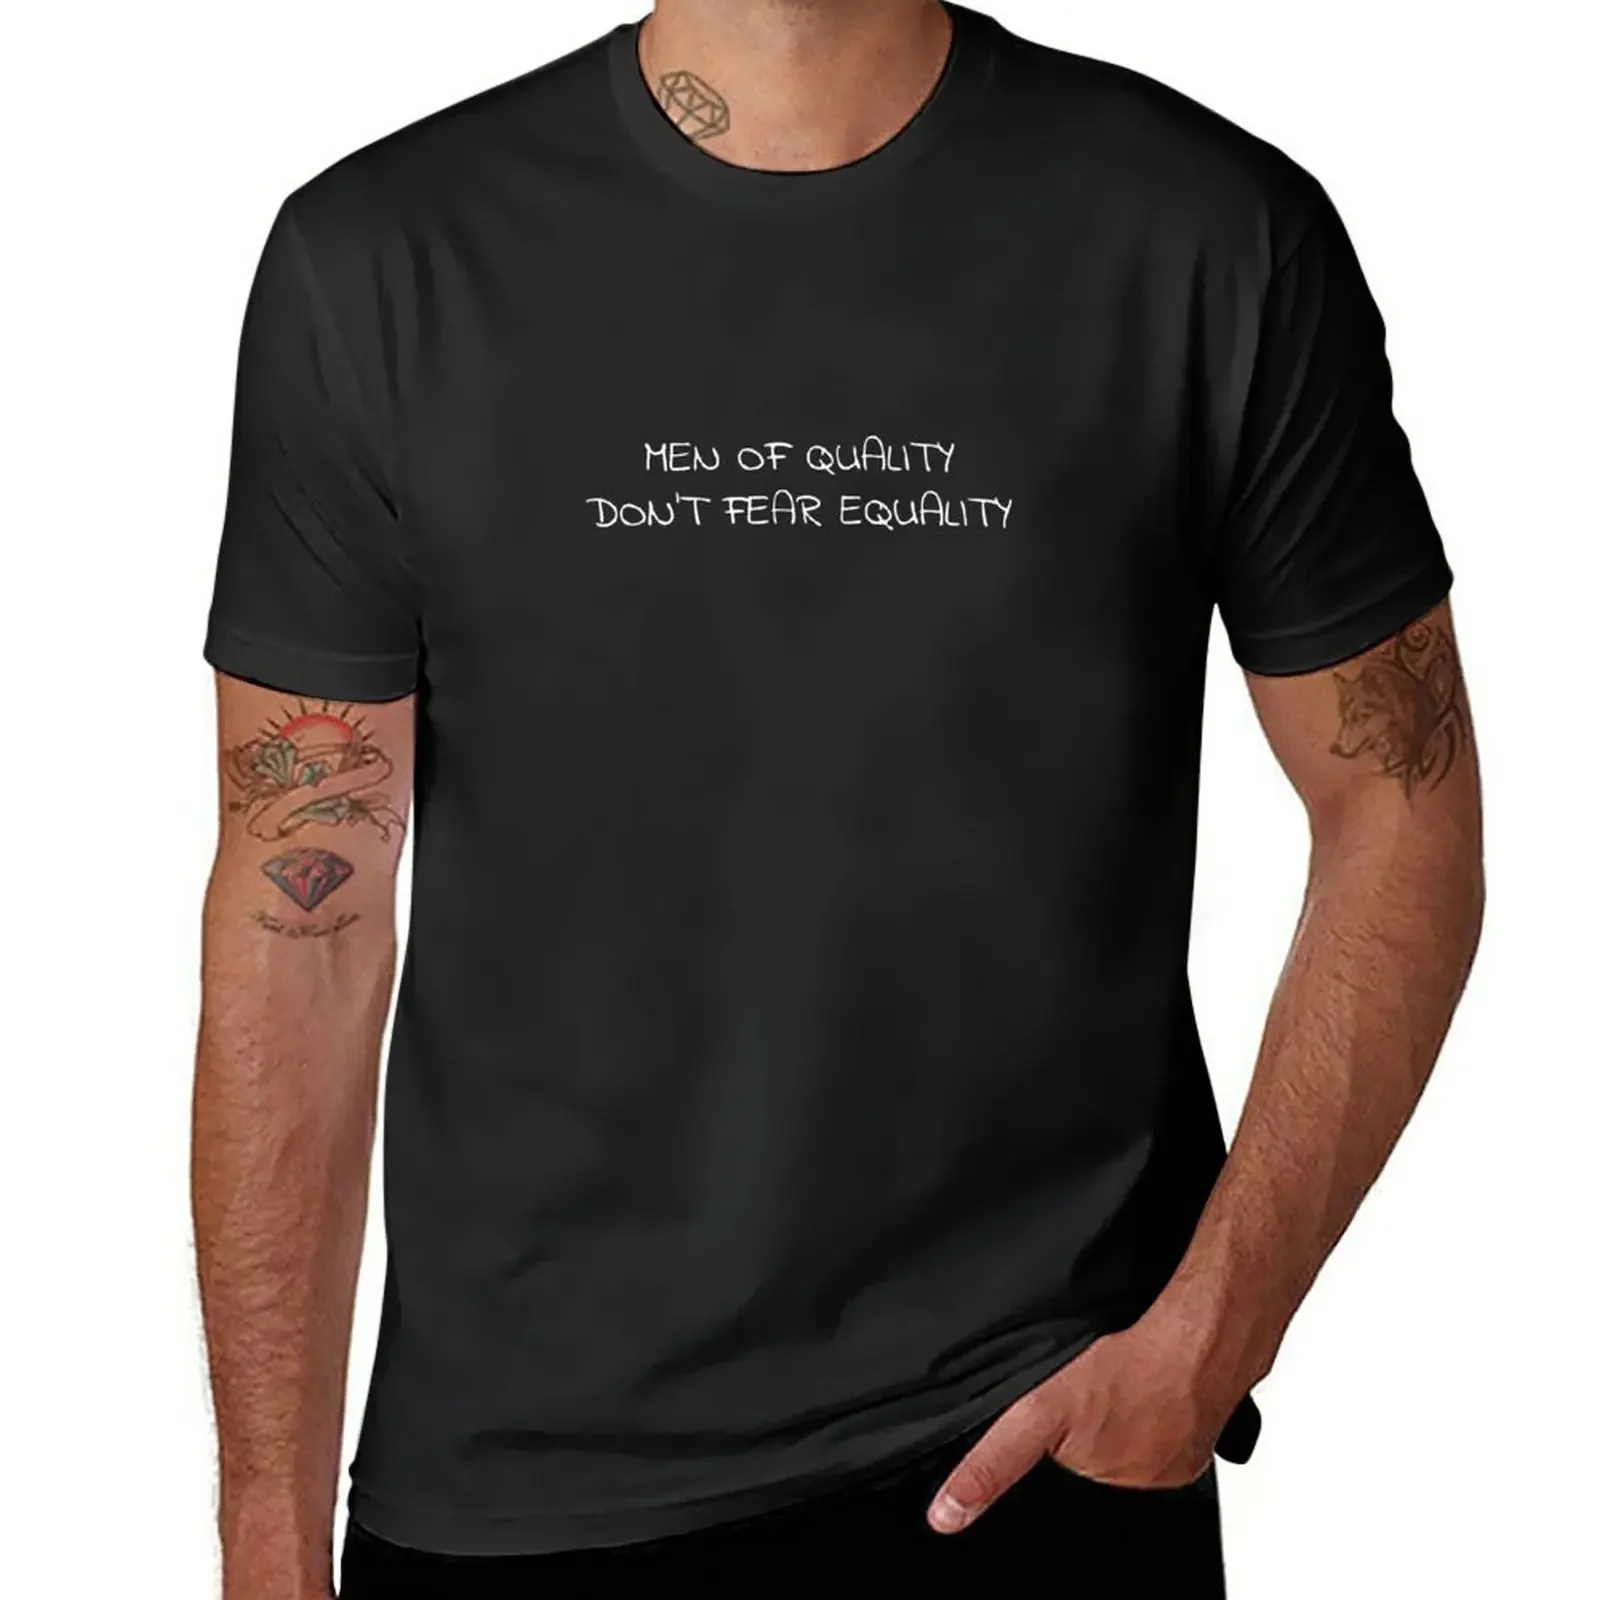 

Men of quality don't fear equality T-Shirt boys animal print animal prinfor boys quick drying plain black t shirts men